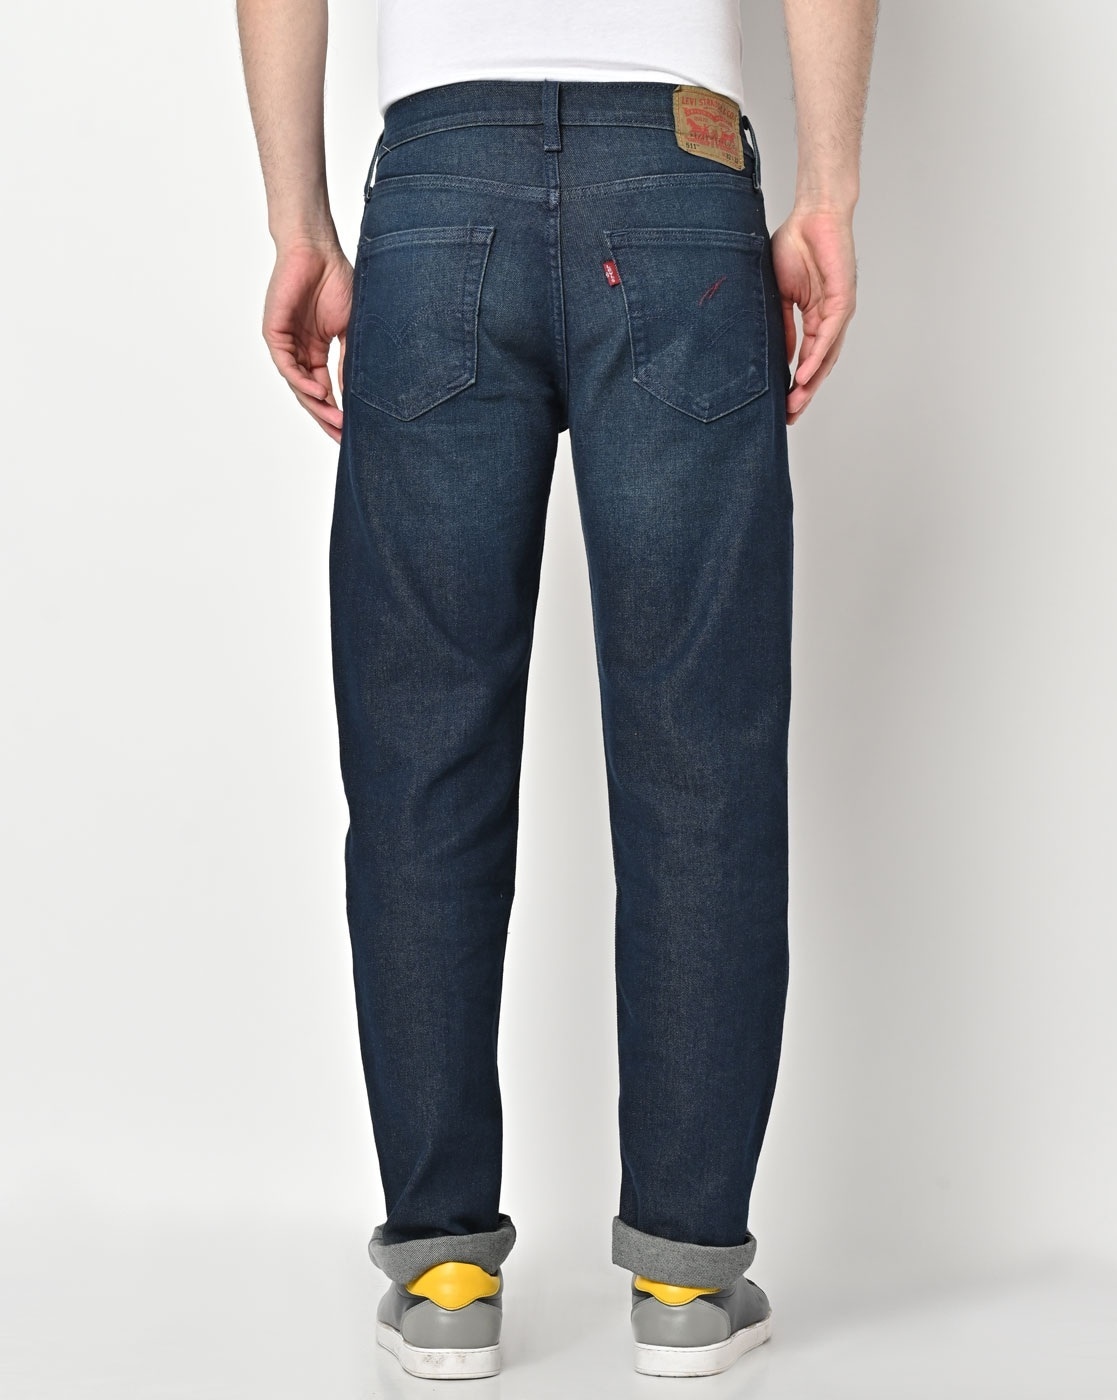 Buy Blue Jeans for Men by LEVIS Online 